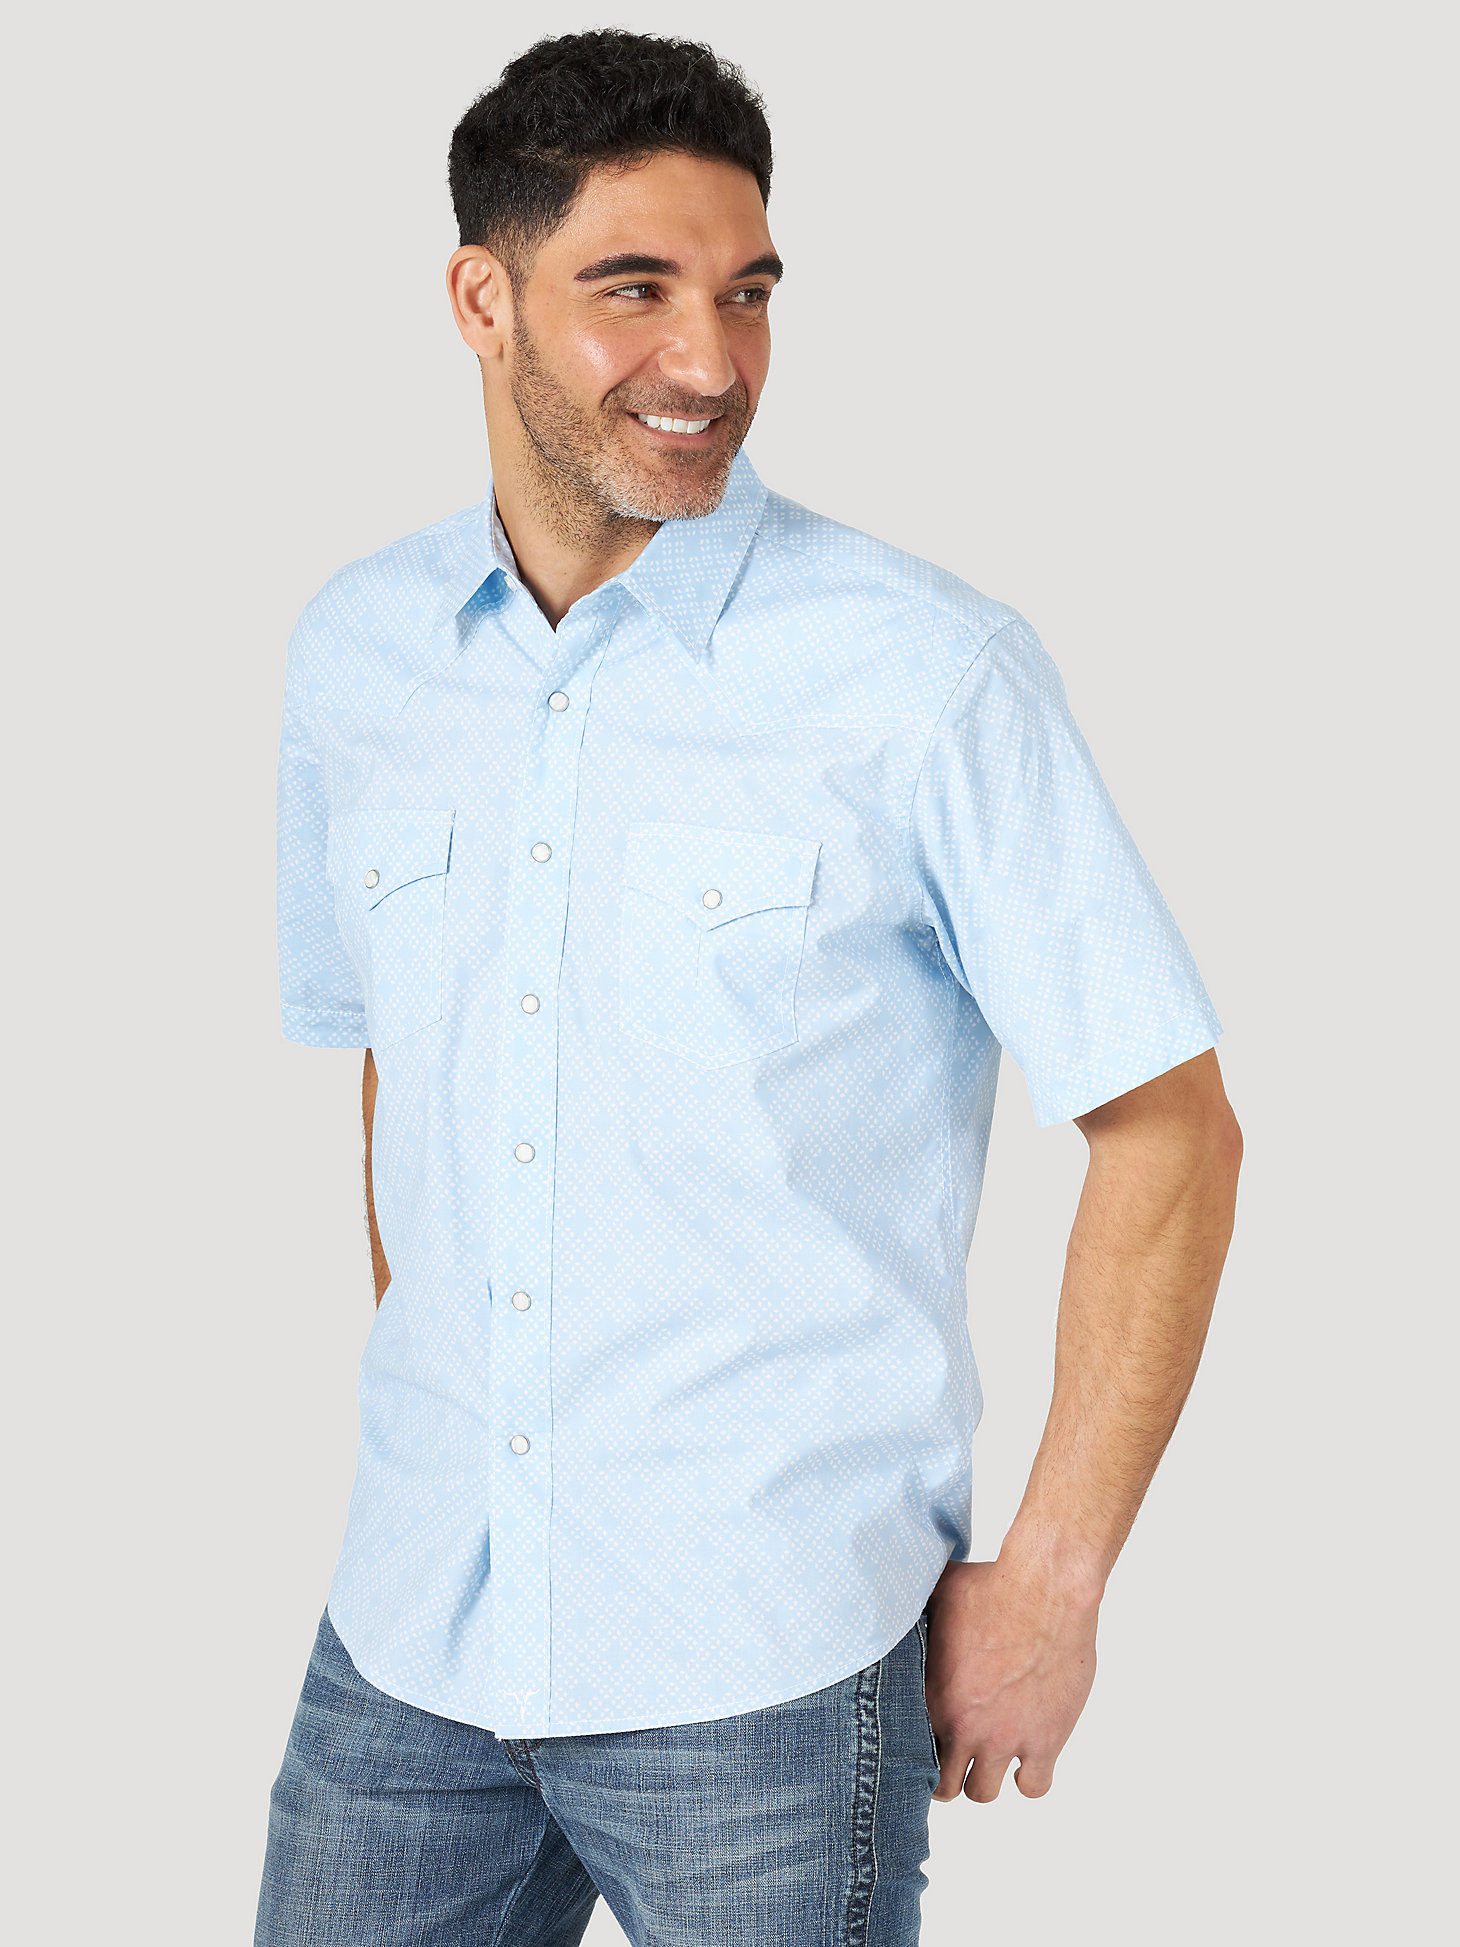 Fseason-Men Classic Trim-Fit Comfy Casual Western Shirt Dress Shirts 